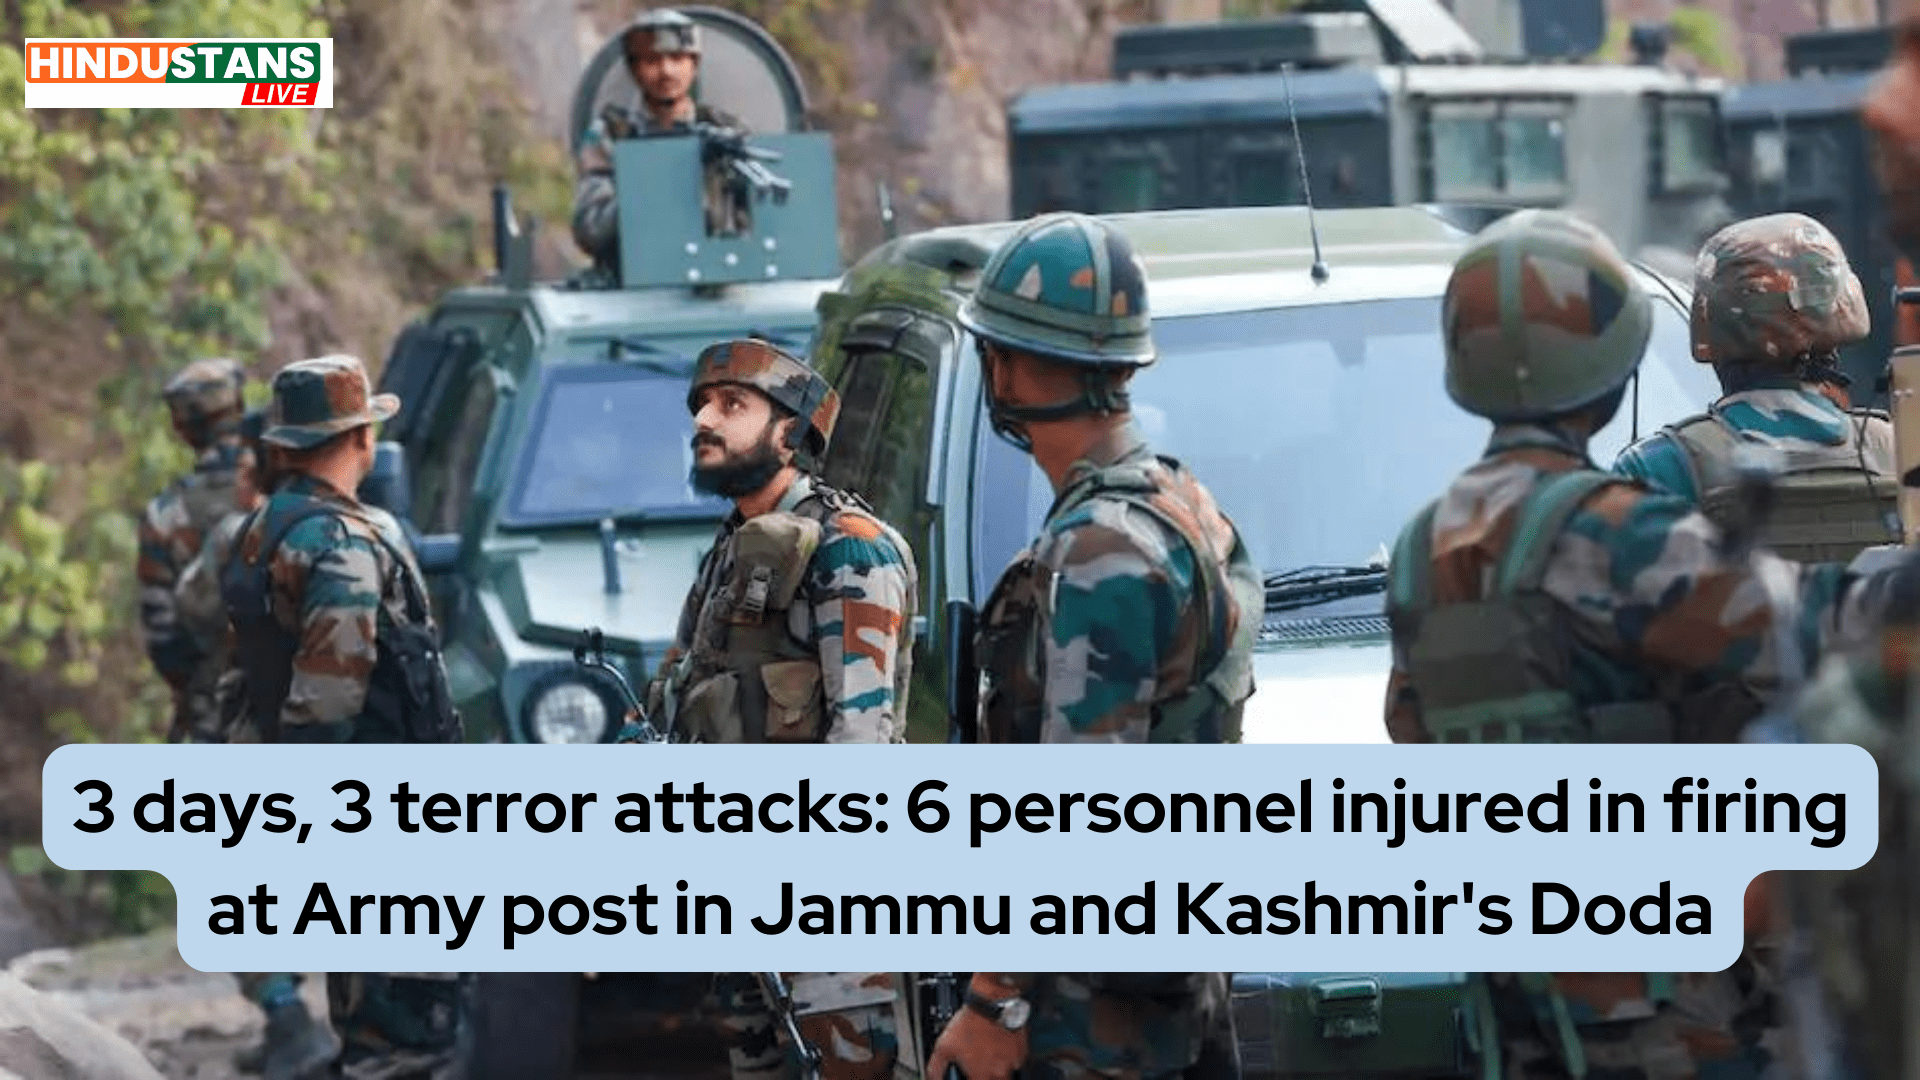 firing at Army post in Jammu and Kashmir's Doda